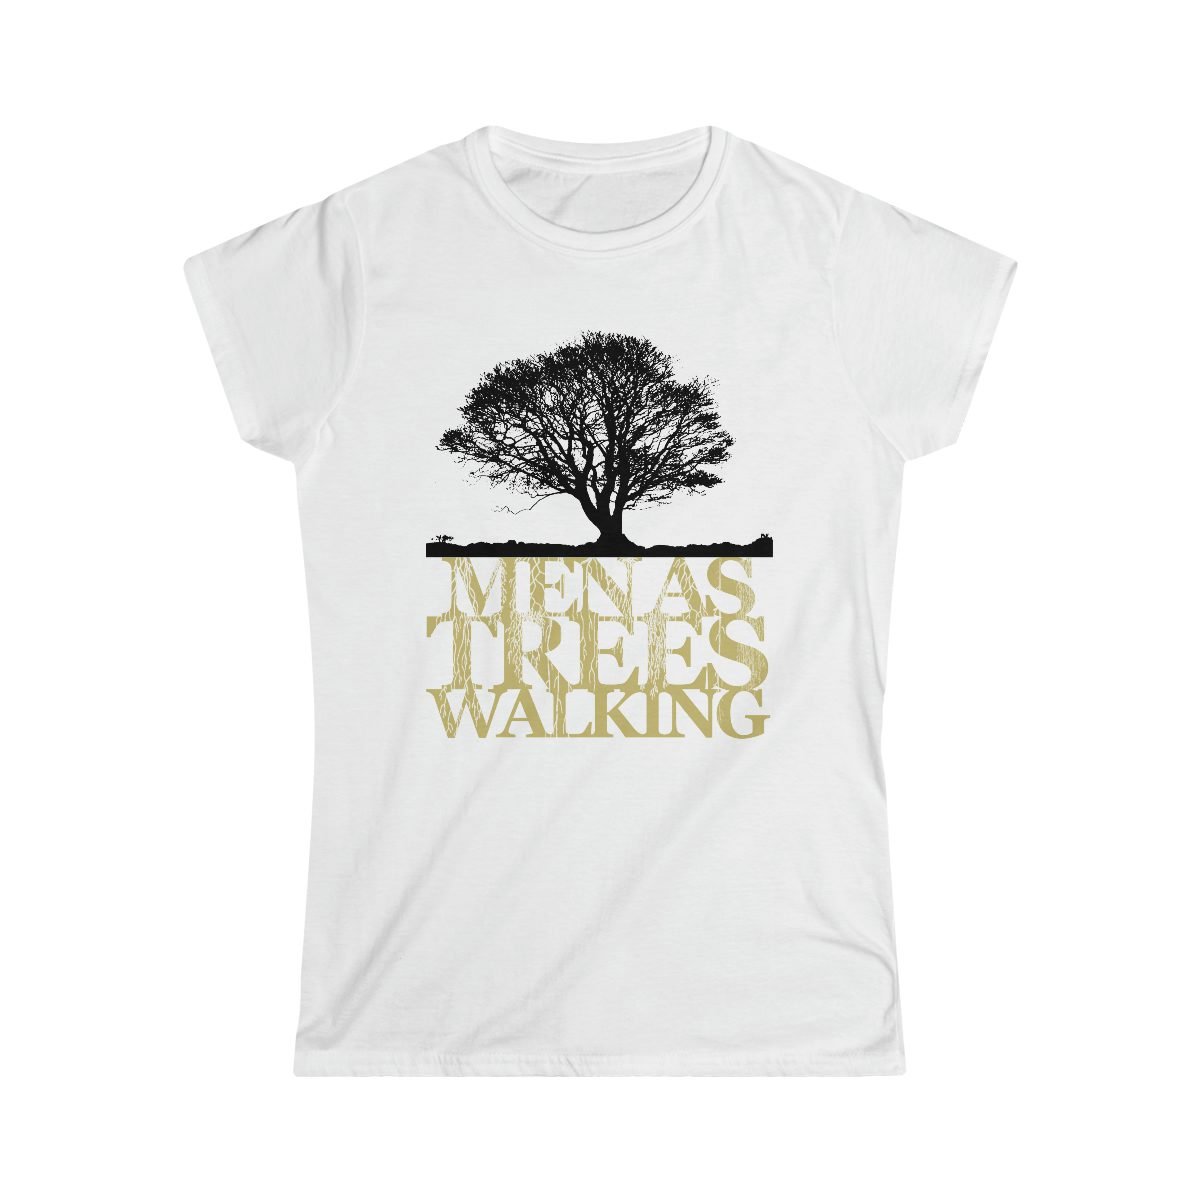 Men As Trees Walking Women’s Short Sleeve Tshirt